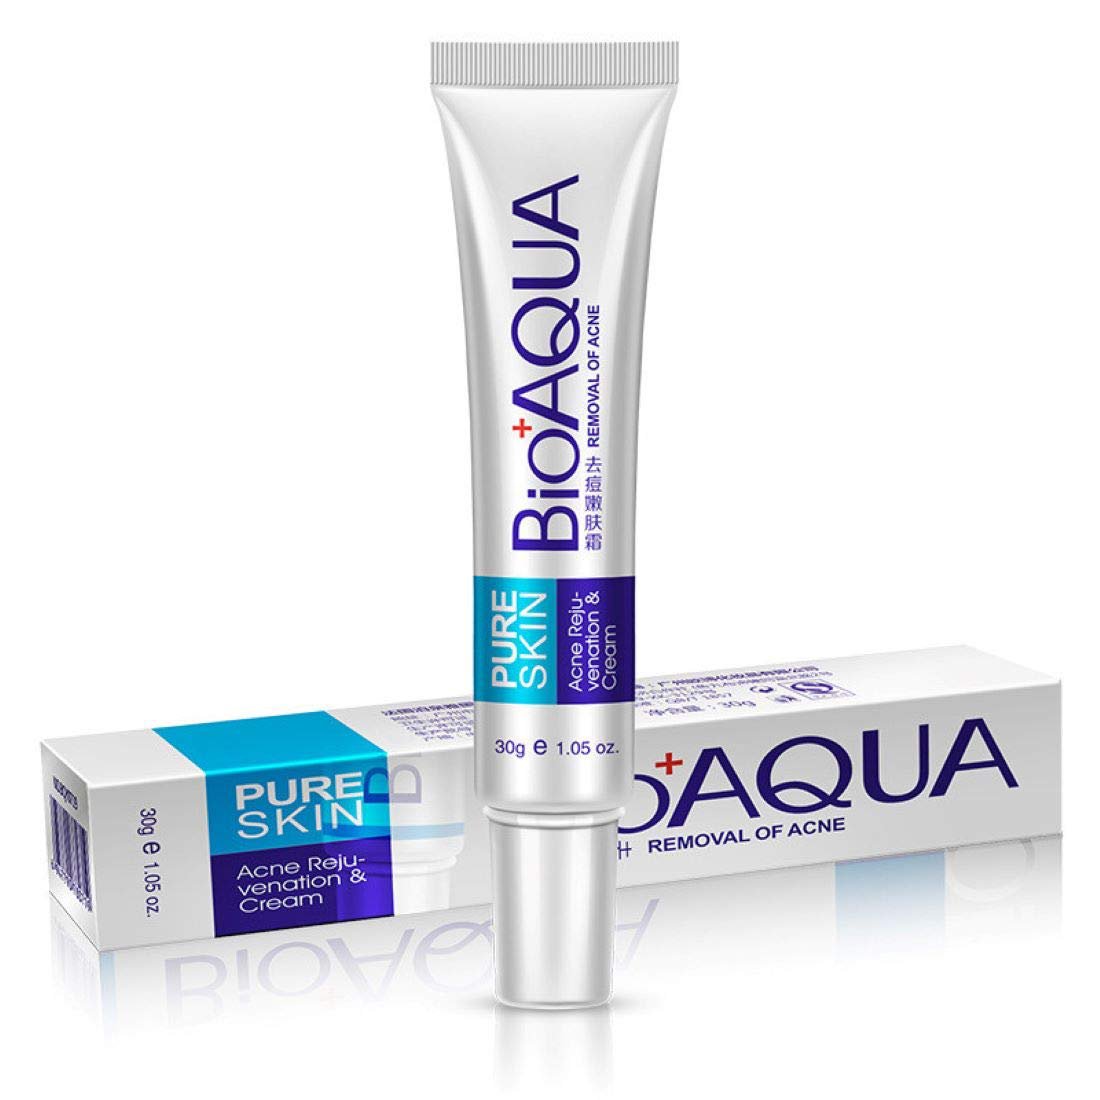 Bioaqua Anti Acne Scar Mark Remover Shrink Pores Treatment Cream 30g